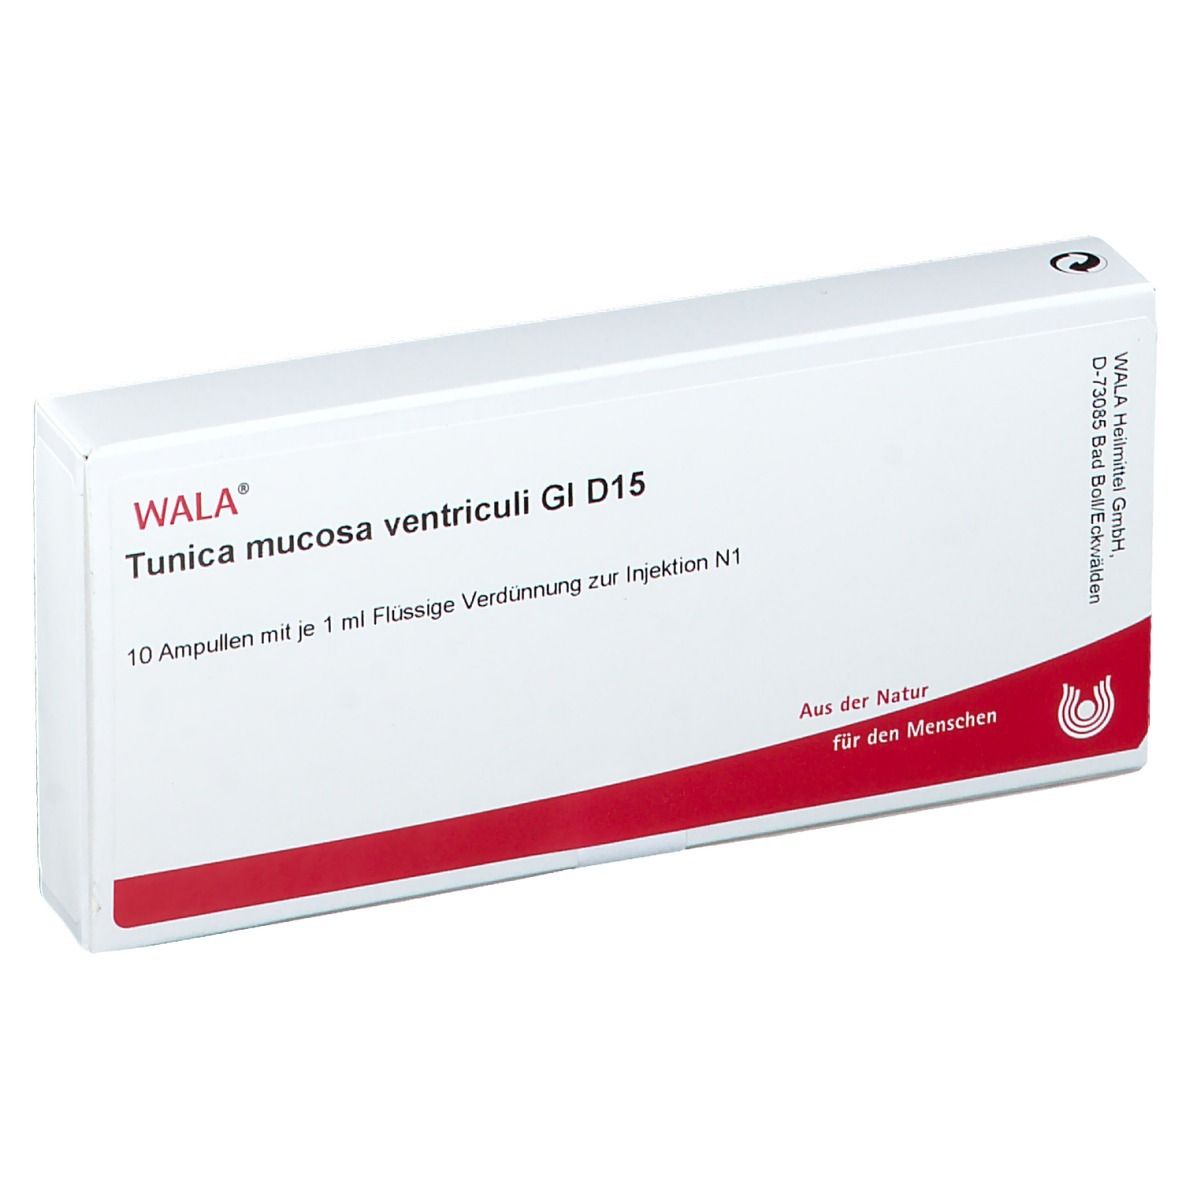 Wala® Tunica mucosa ventriculi Gl D 15